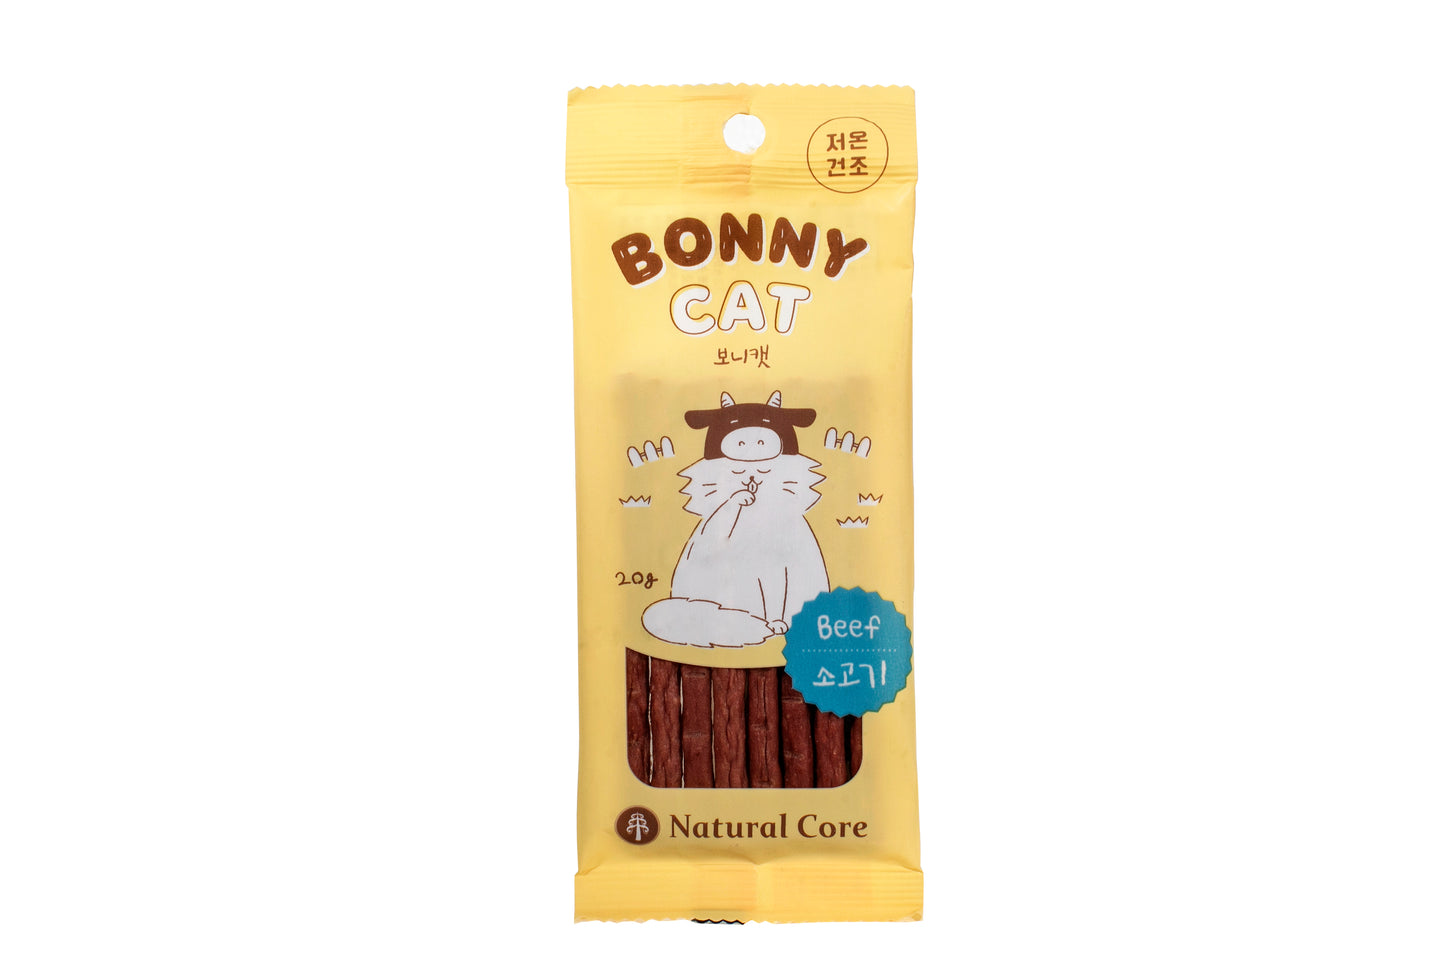 Natural Core - Bonny cat Beef Jerky 20g